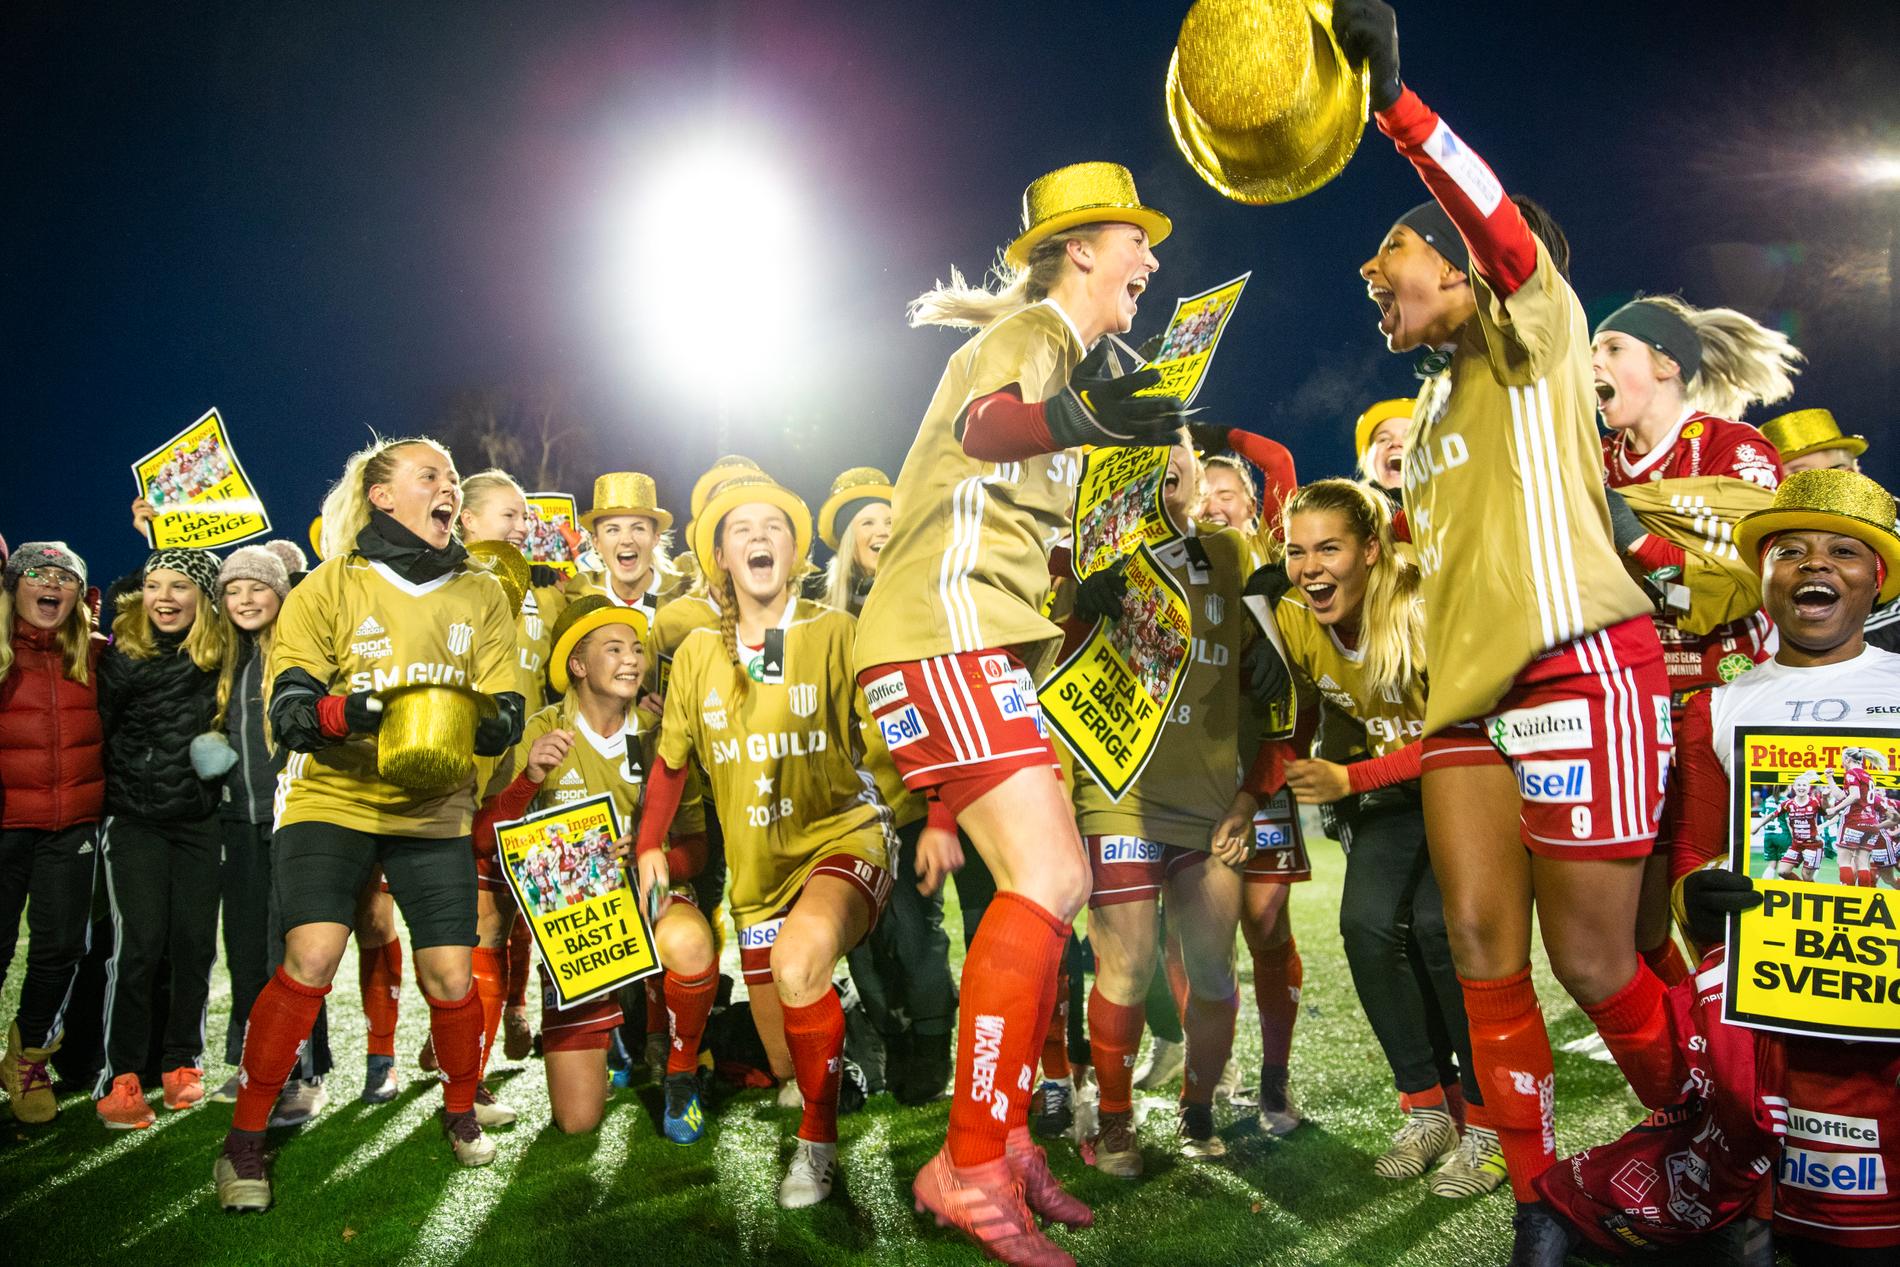 Piteås Julia Karlenäs och Madelen Janogy firar SM-guldet 2018.